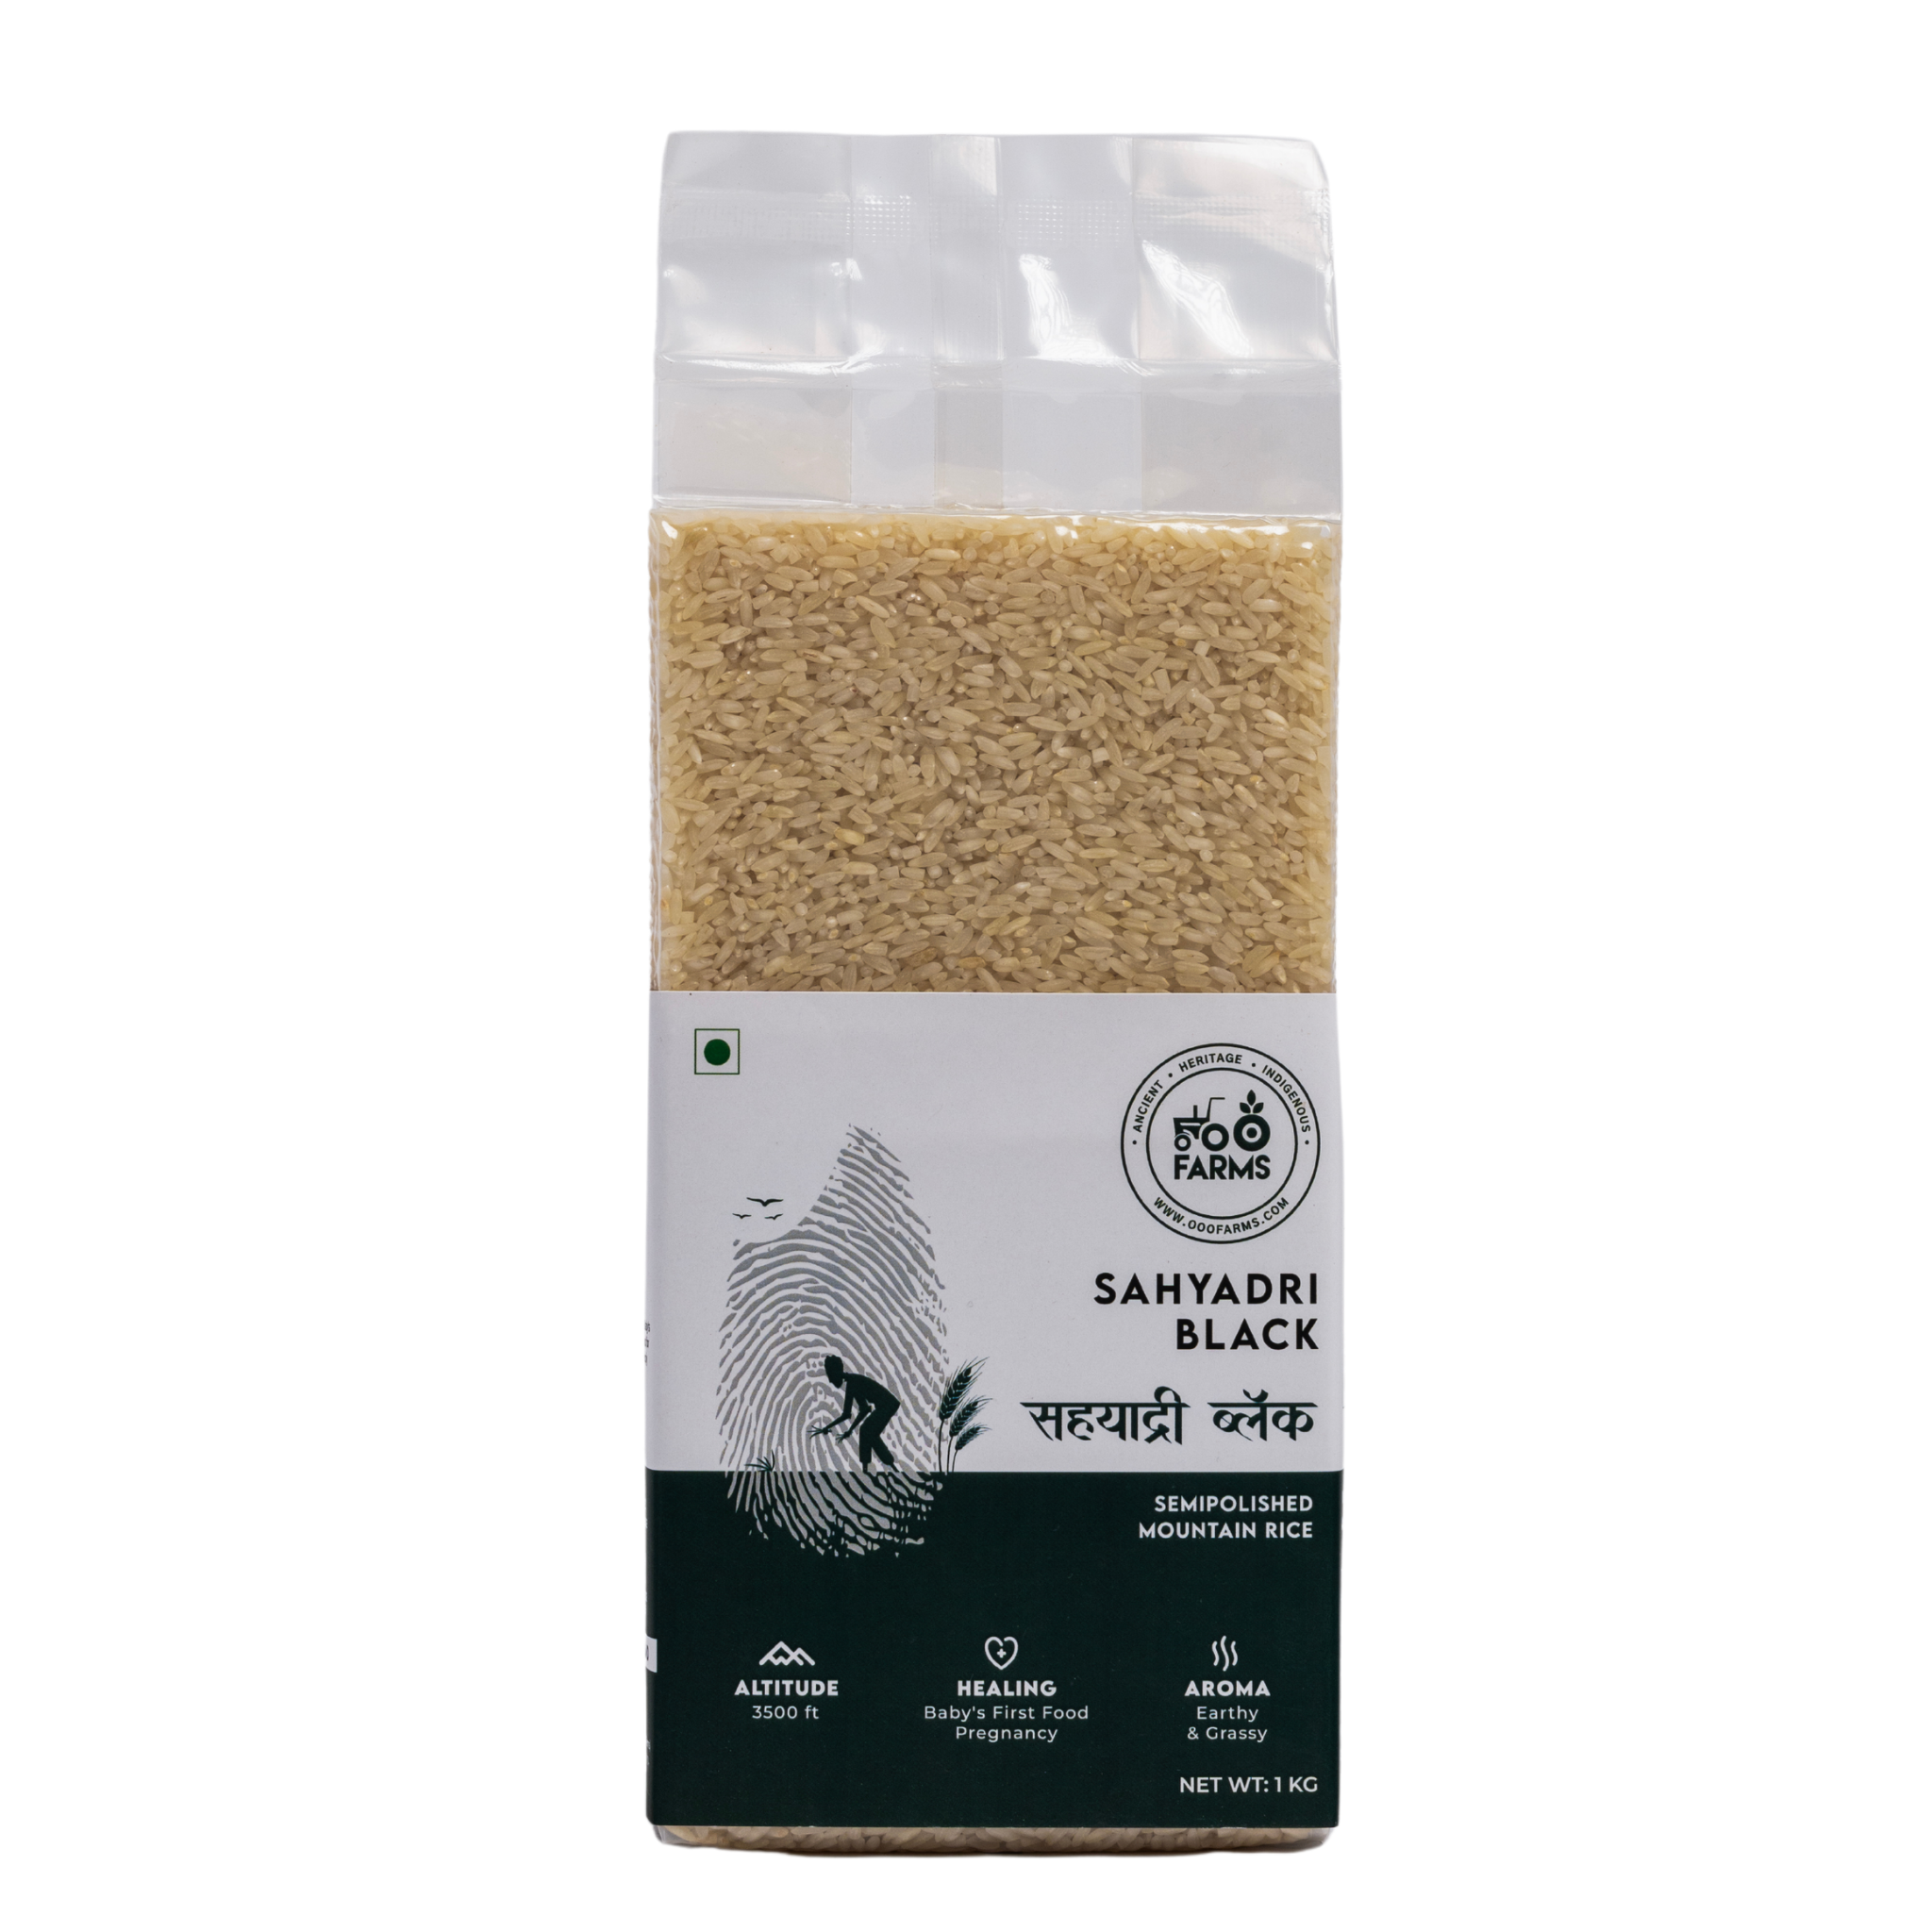 OOO Farms Sahyadri Black Rice (Semipolished) Package Frontside